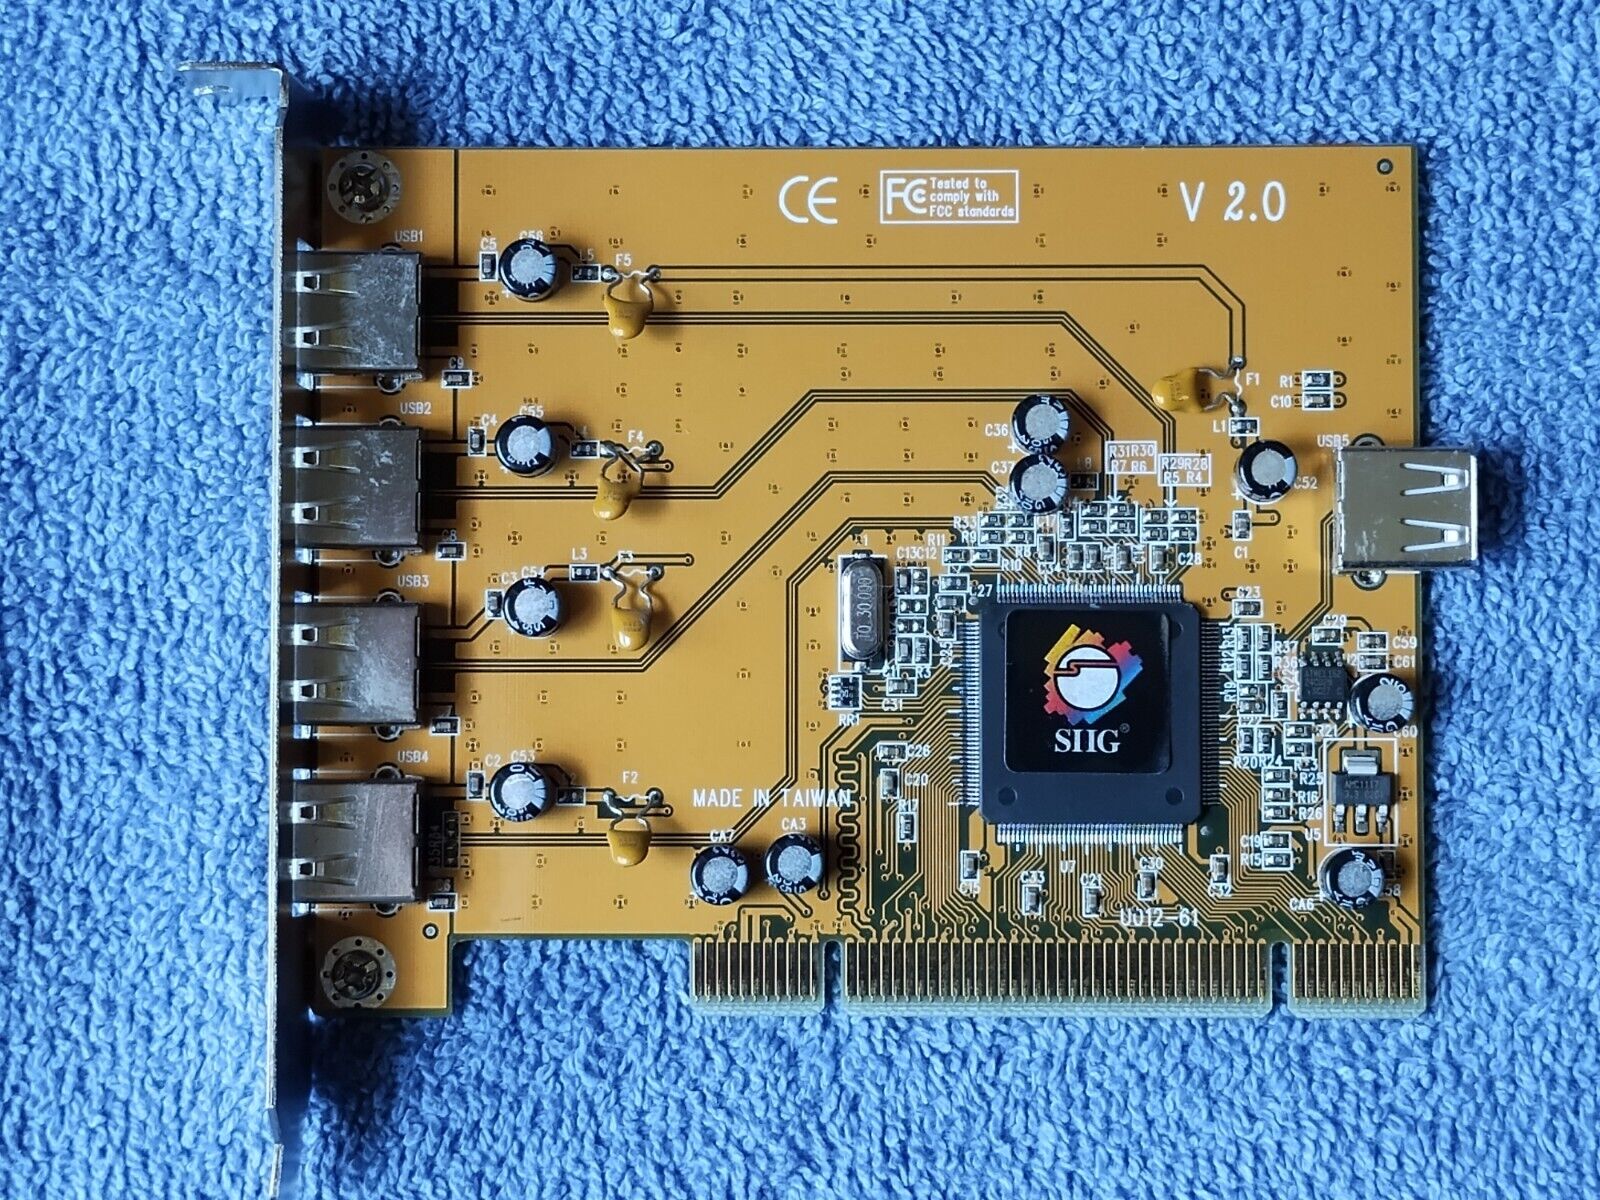 SIIG 5-Port USB 2.0 PCI Adapter Card